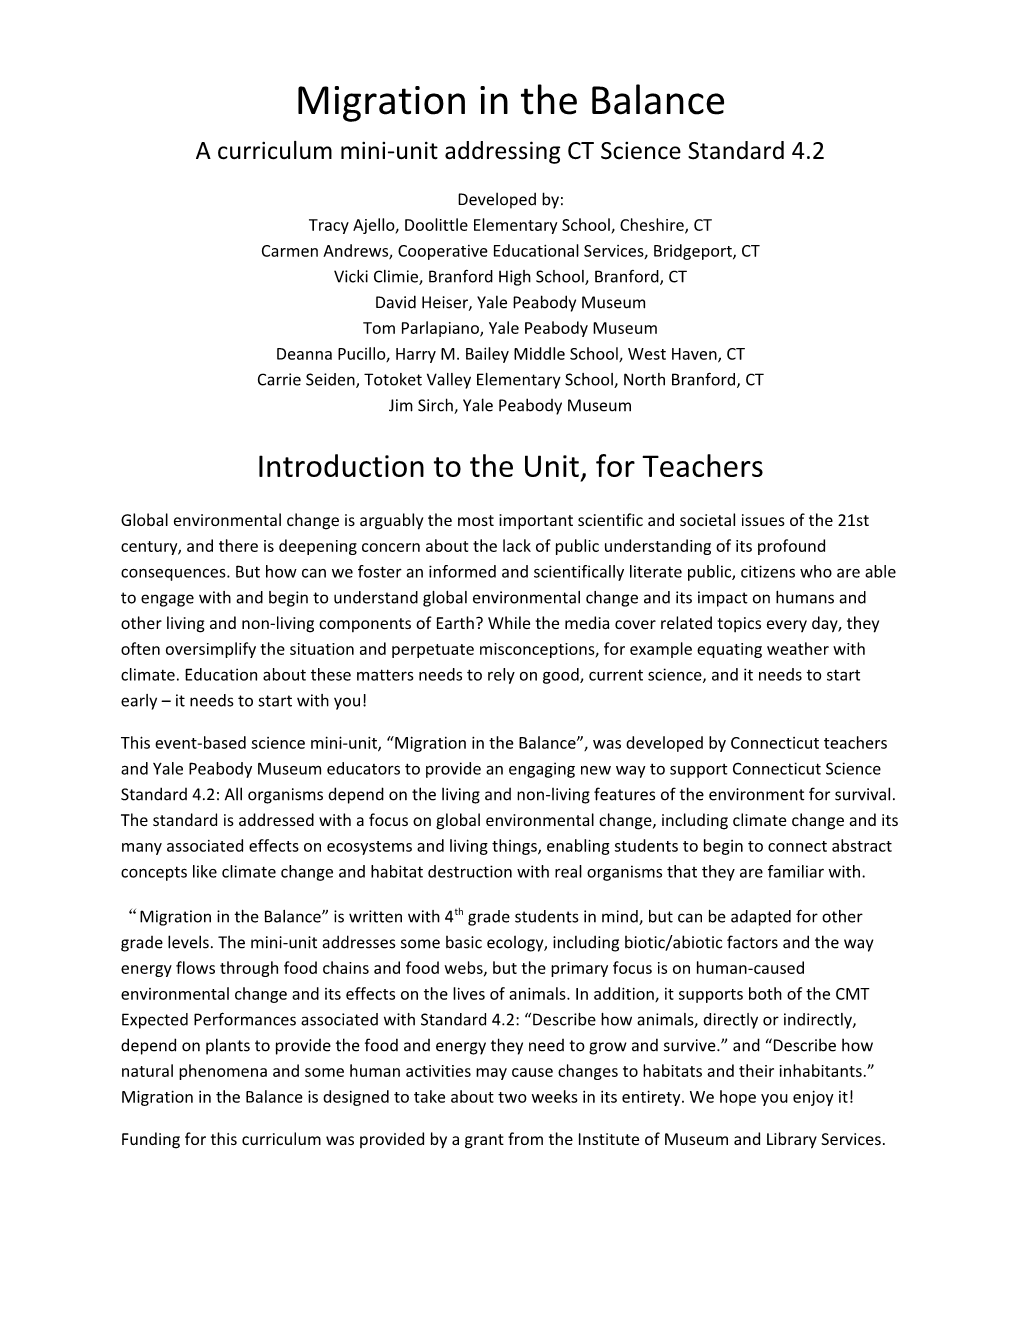 A Curriculum Mini-Unit Addressing CT Science Standard 4.2